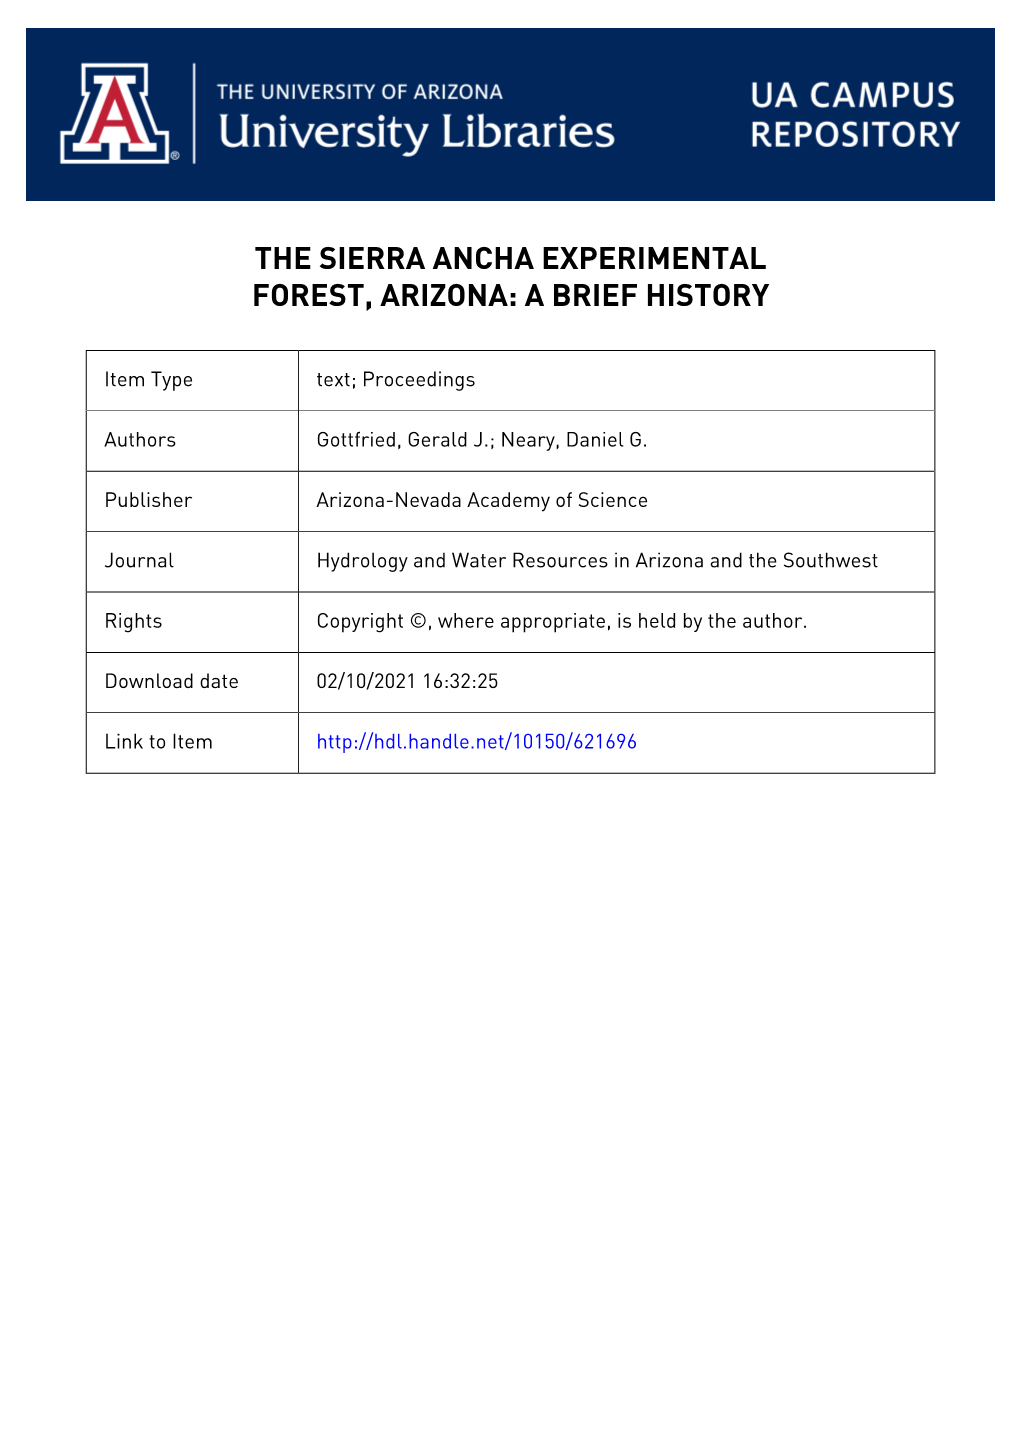 The Sierra Ancha Experimental Forest, Arizona: a Brief History